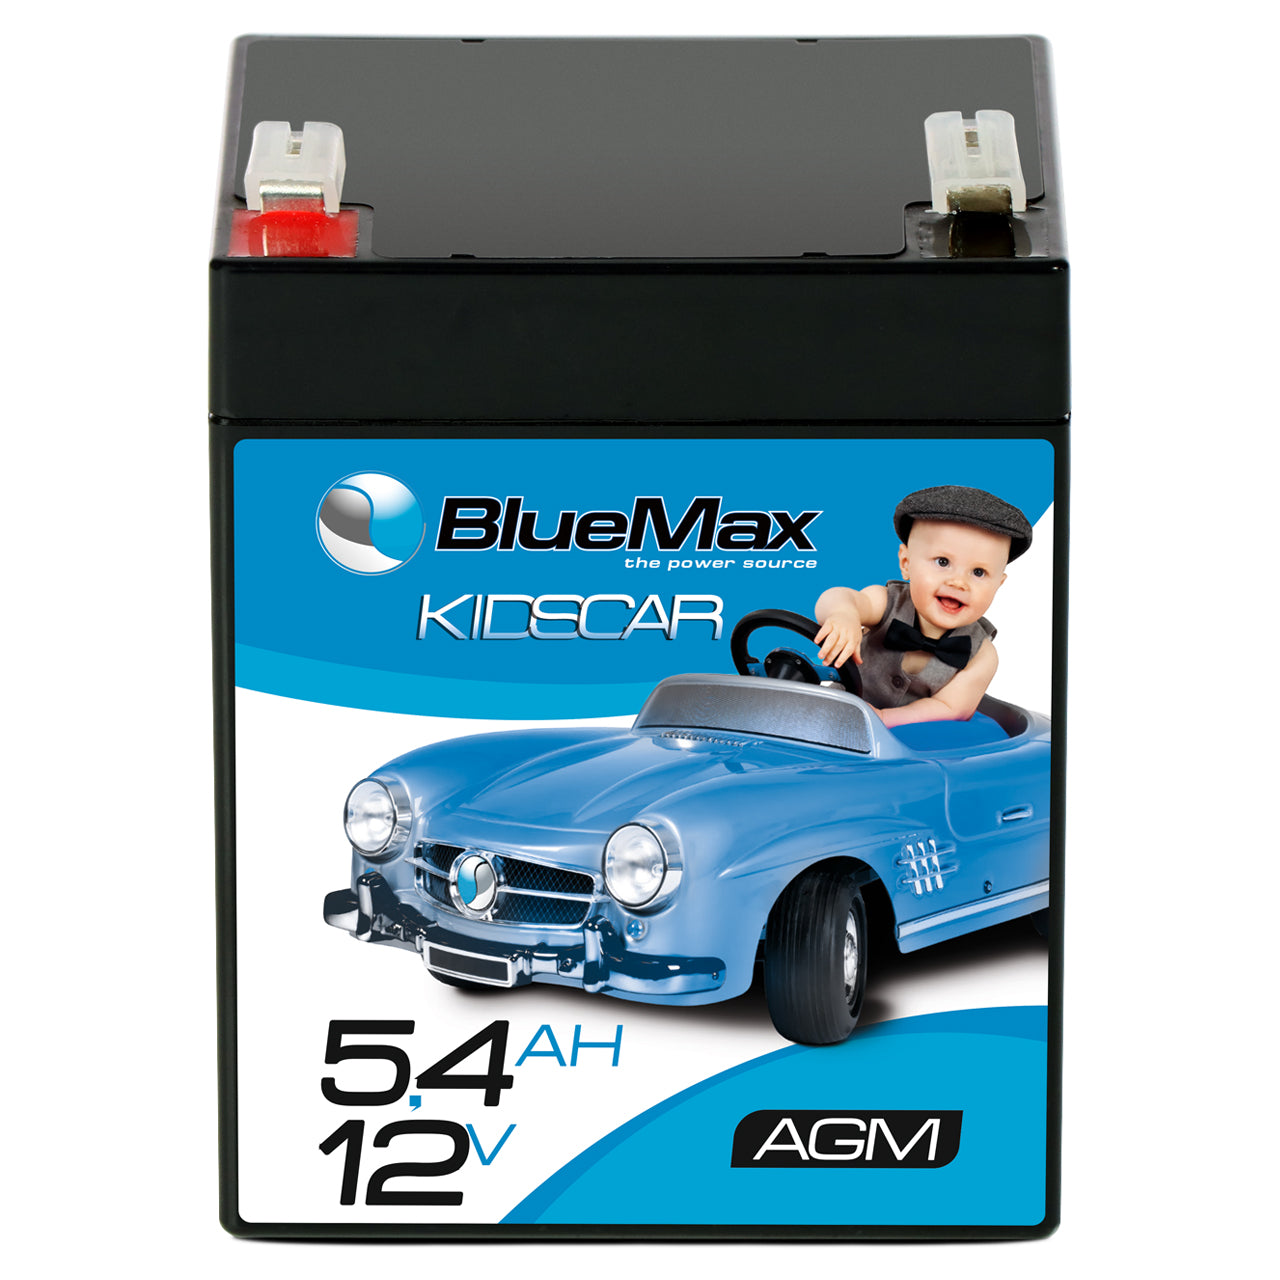 BLUEMAX KidsCar AGM 12V 5,4Ah